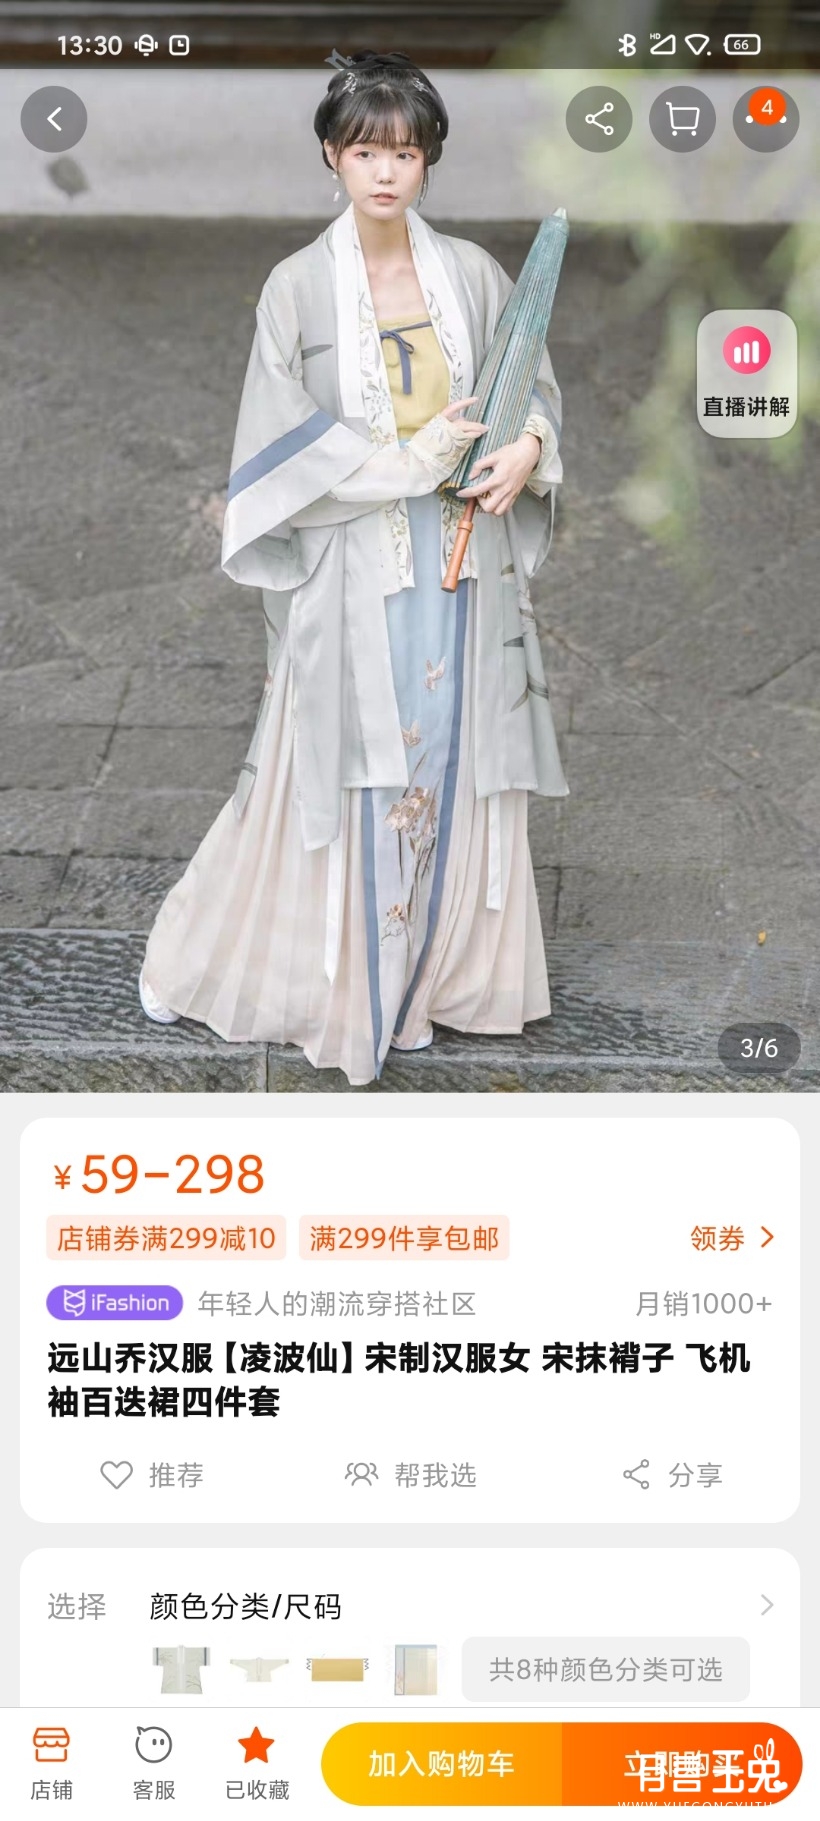 Screenshot_2021-03-31-13-30-06-895_com.taobao.taobao.jpg